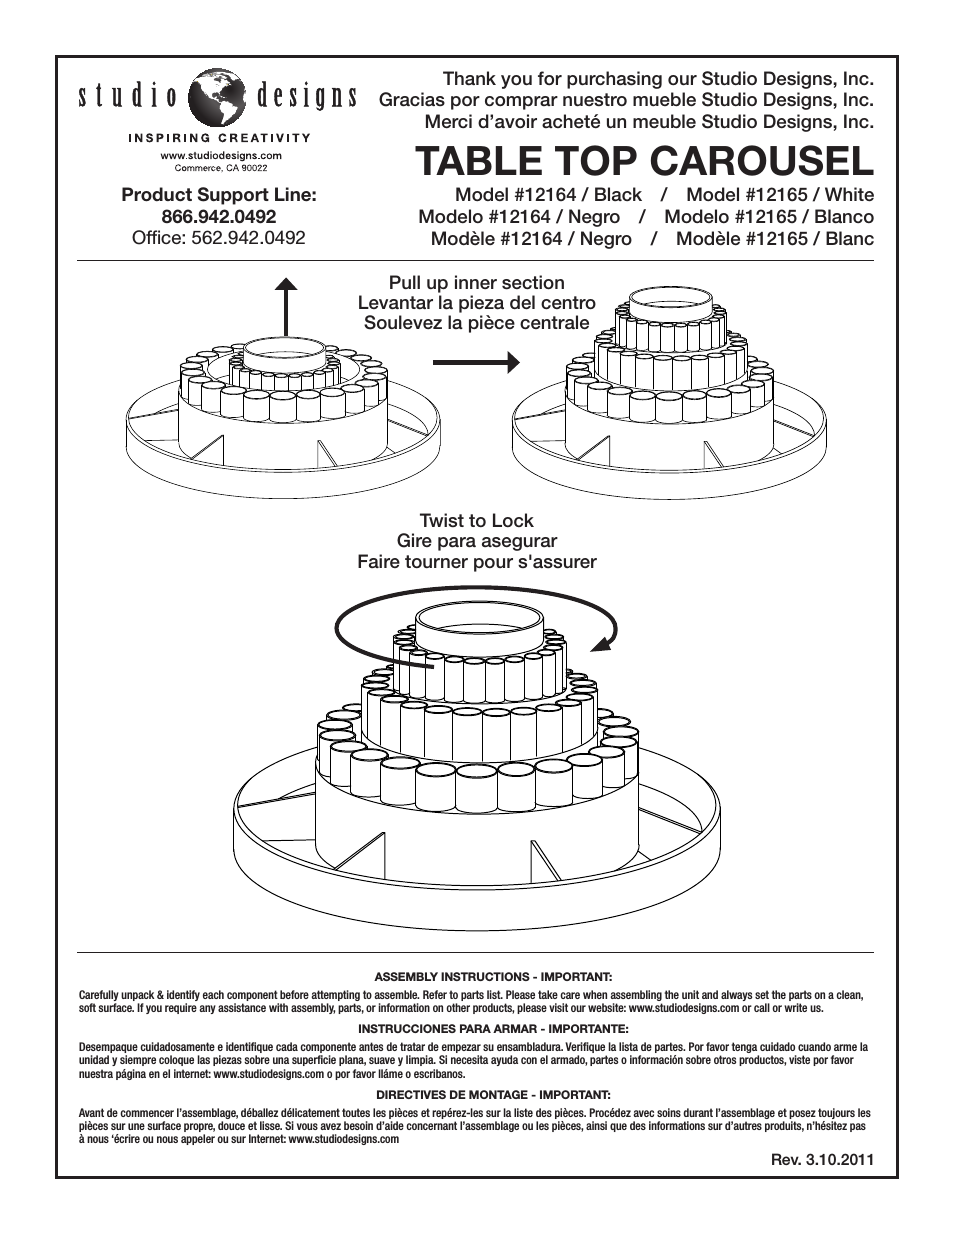 Table Top Carousel